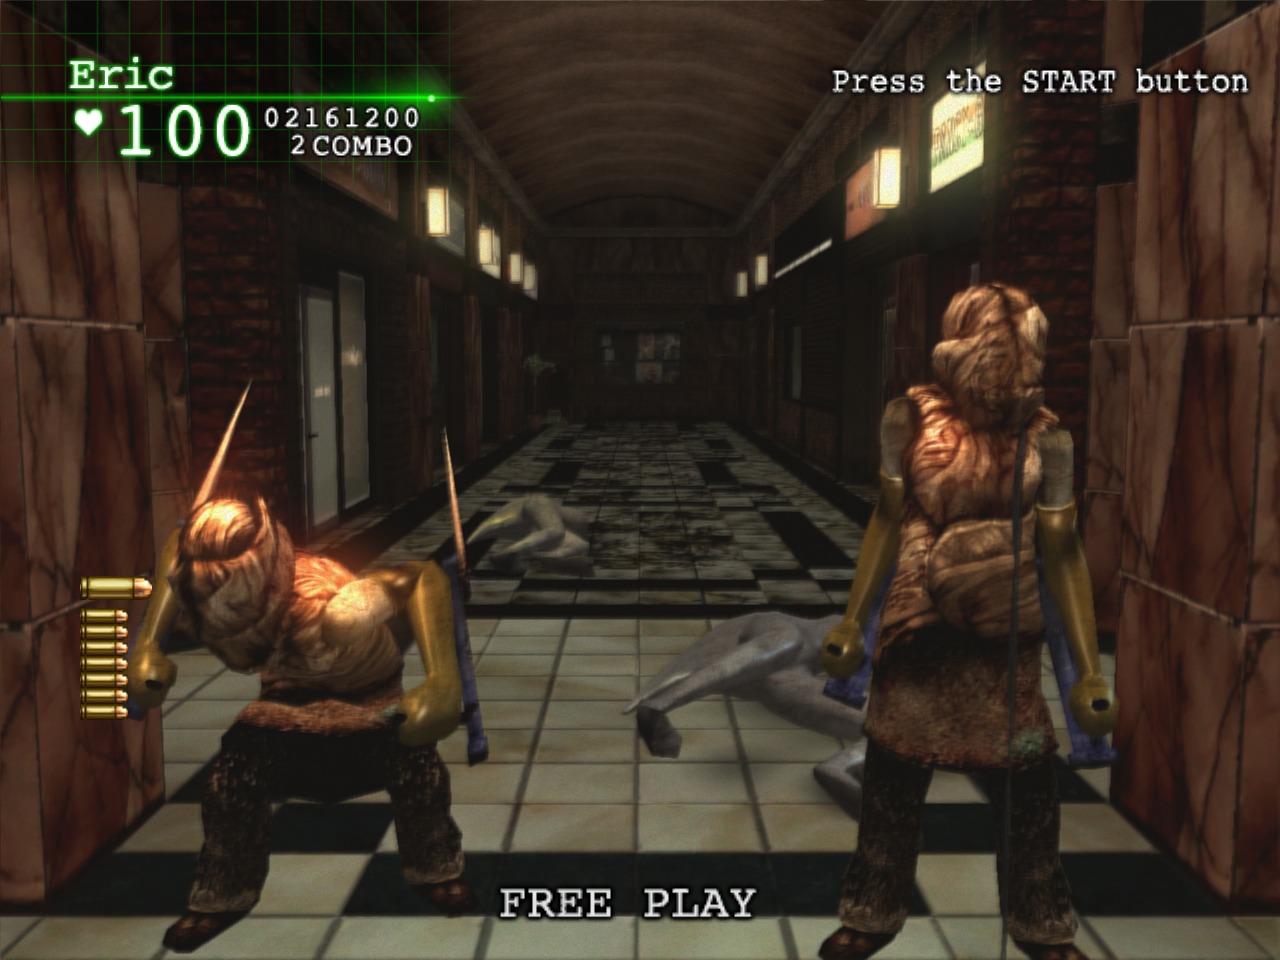 Silent Hill: The Arcade - Wikipedia